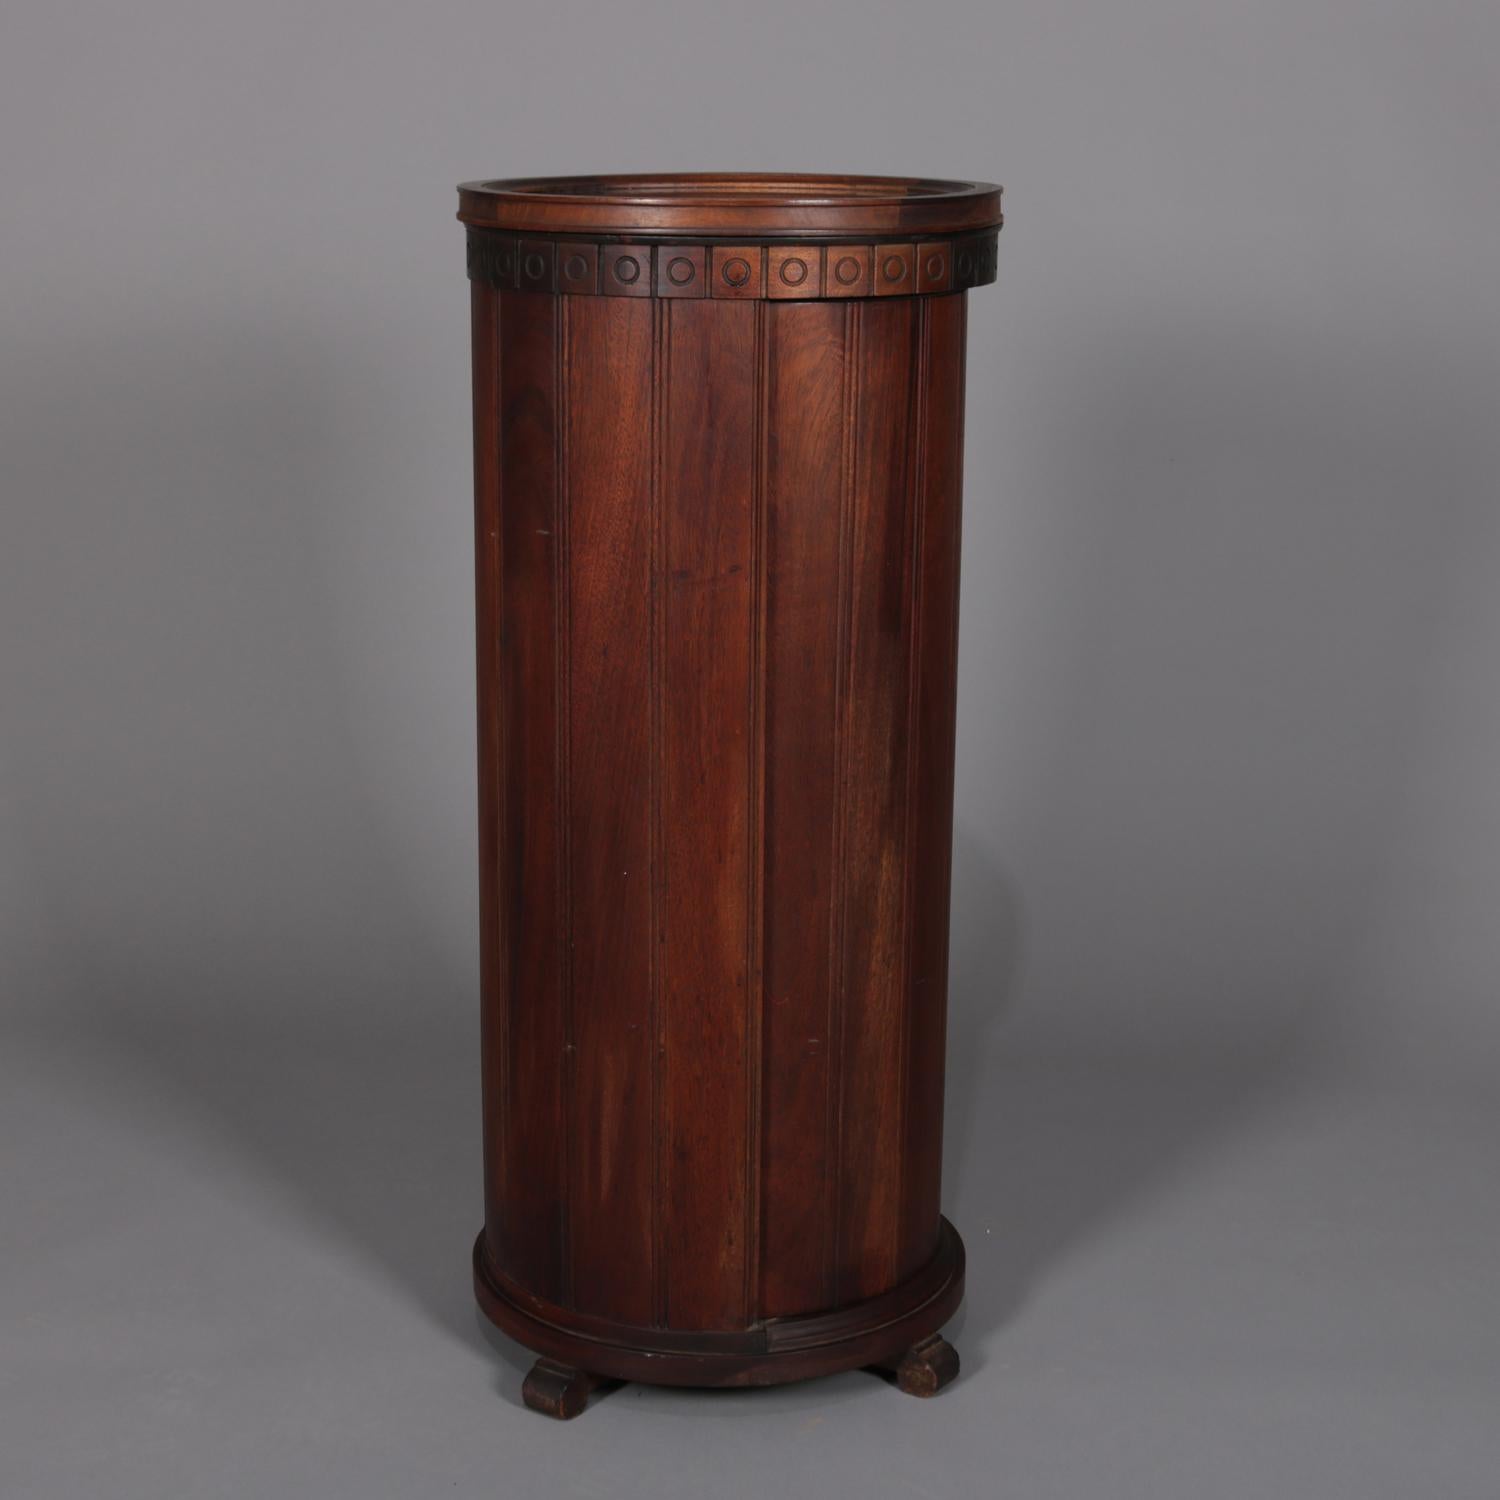 20th Century Antique English Mahogany Column Form Liquor Cellarette and Display Pedestal